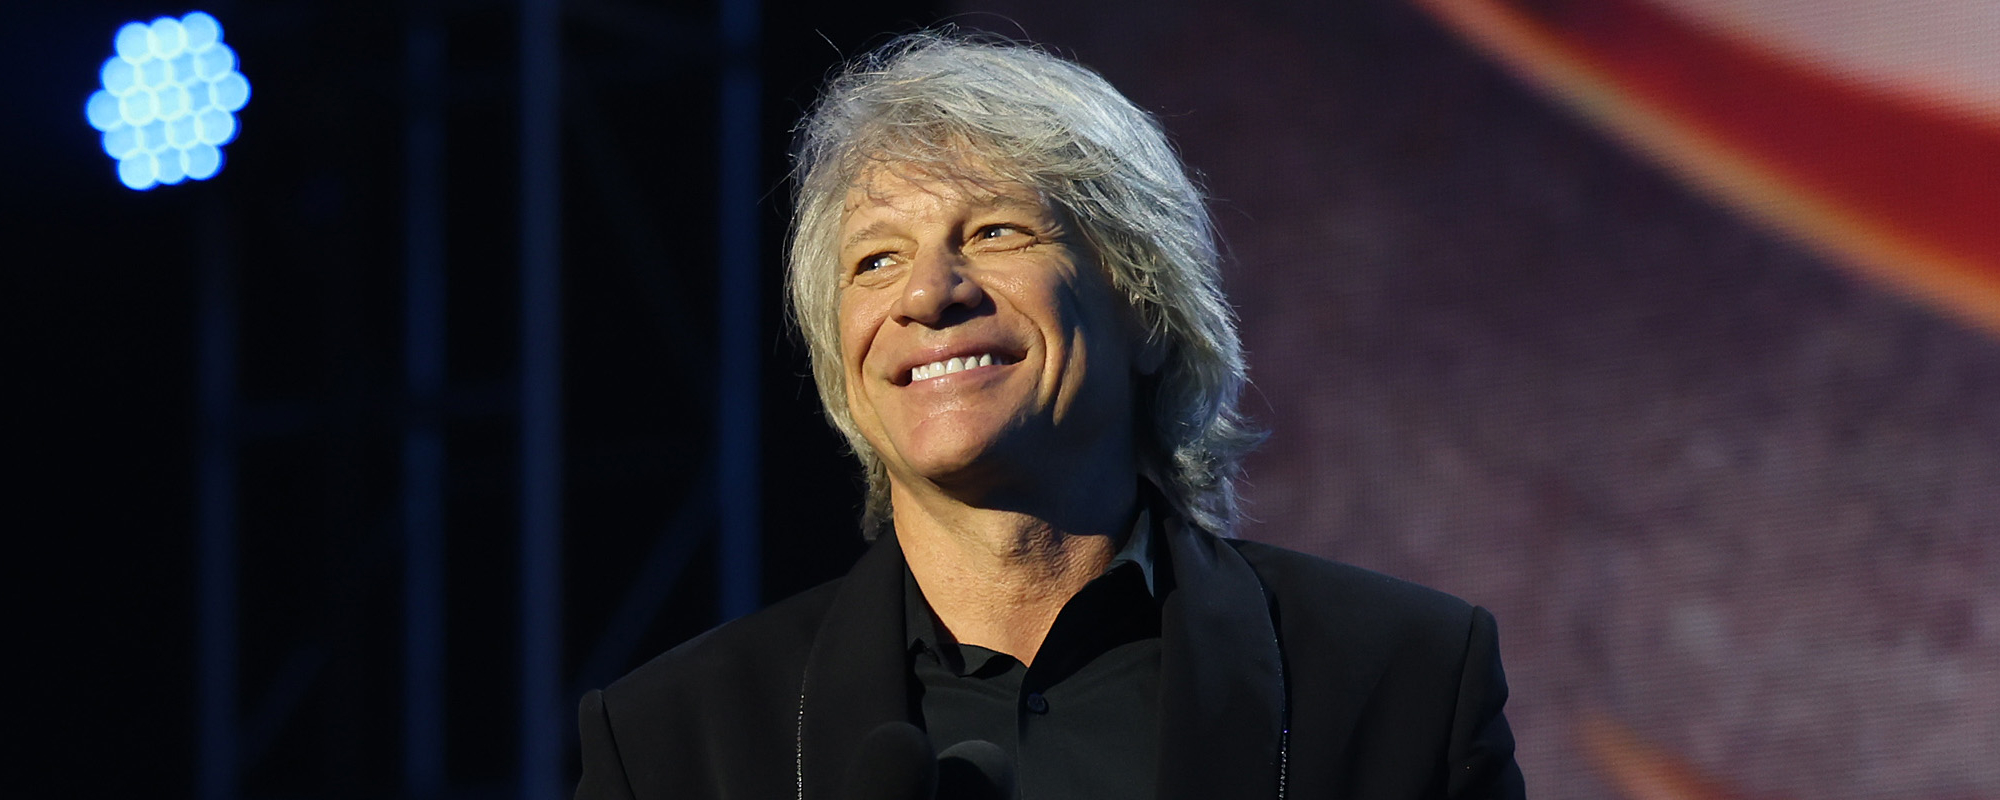 Jon Bon Jovi Reveals Serious Doubt Surrounding His Touring Future After “Major Surgery”